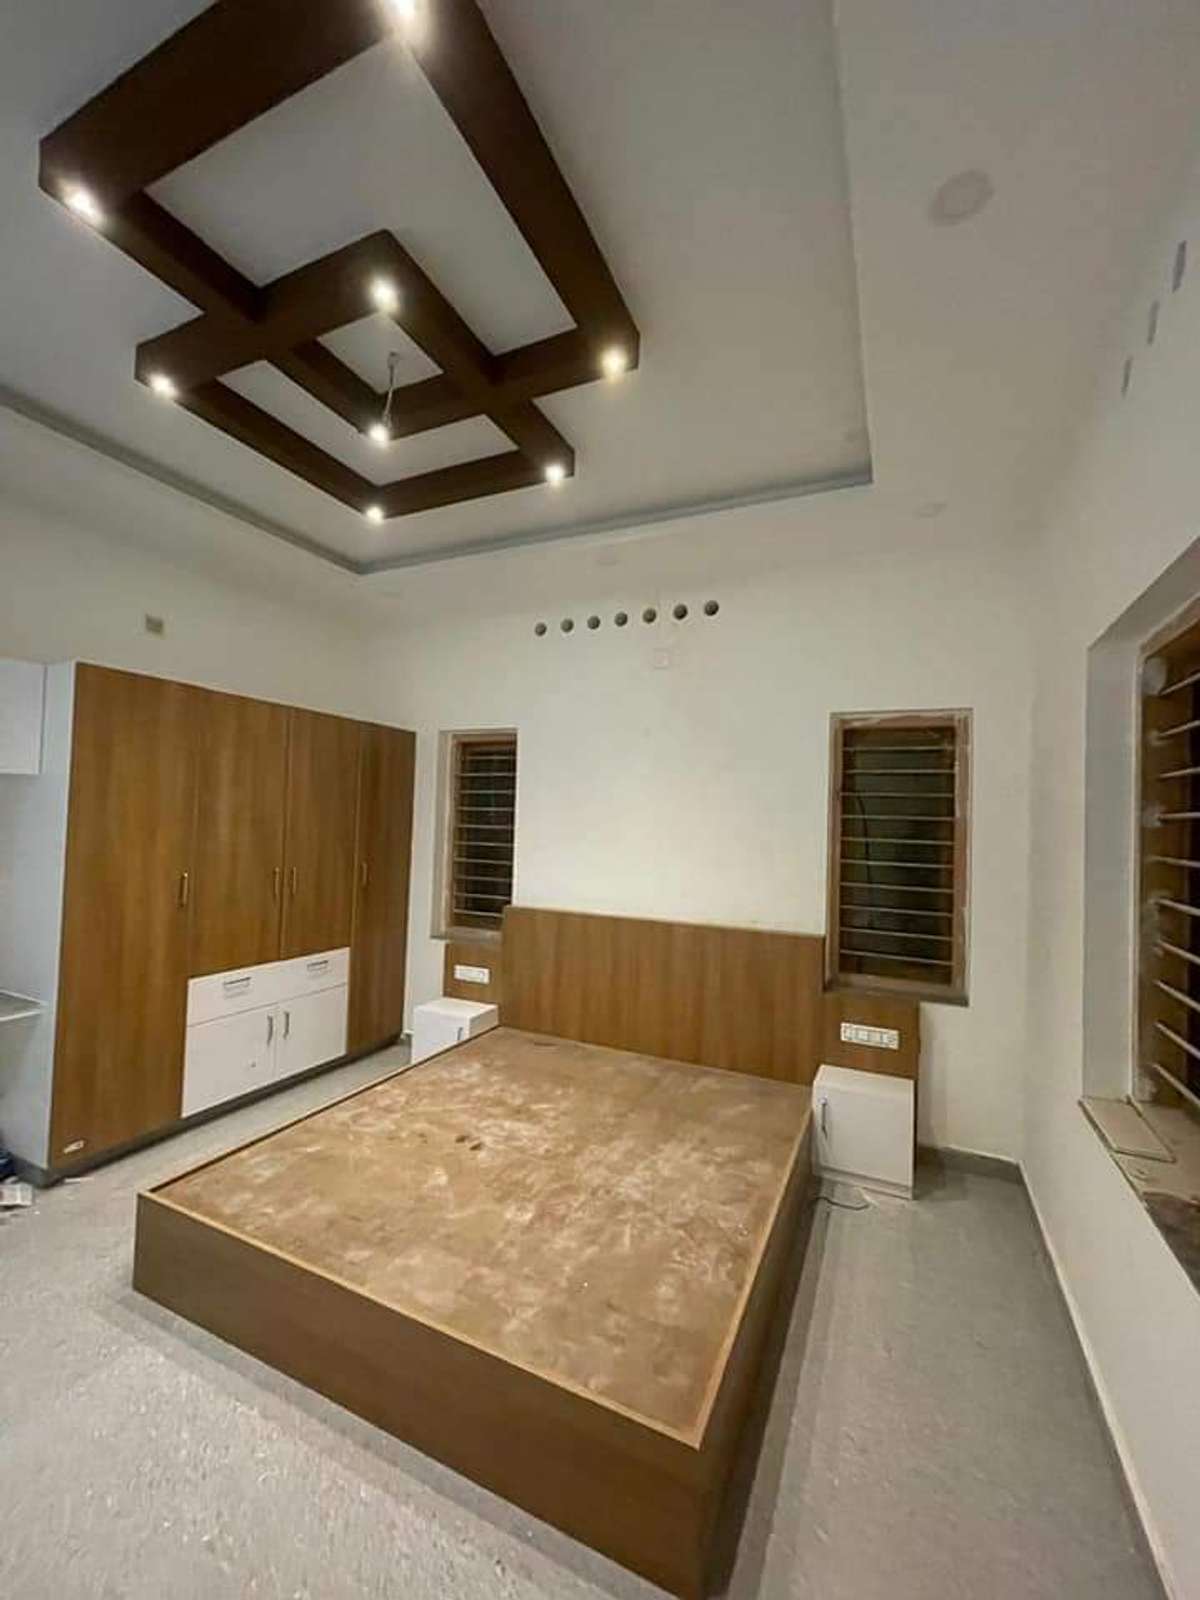 Ceiling, Lighting, Bedroom, Storage, Window Designs by Carpenter ЁЯЩП рдлреЙрд▓реЛ рдХрд░реЛ рджрд┐рд▓реНрд▓реА рдХрд╛рд░рдкреЗрдВрдЯрд░ рдХреЛ, Delhi | Kolo